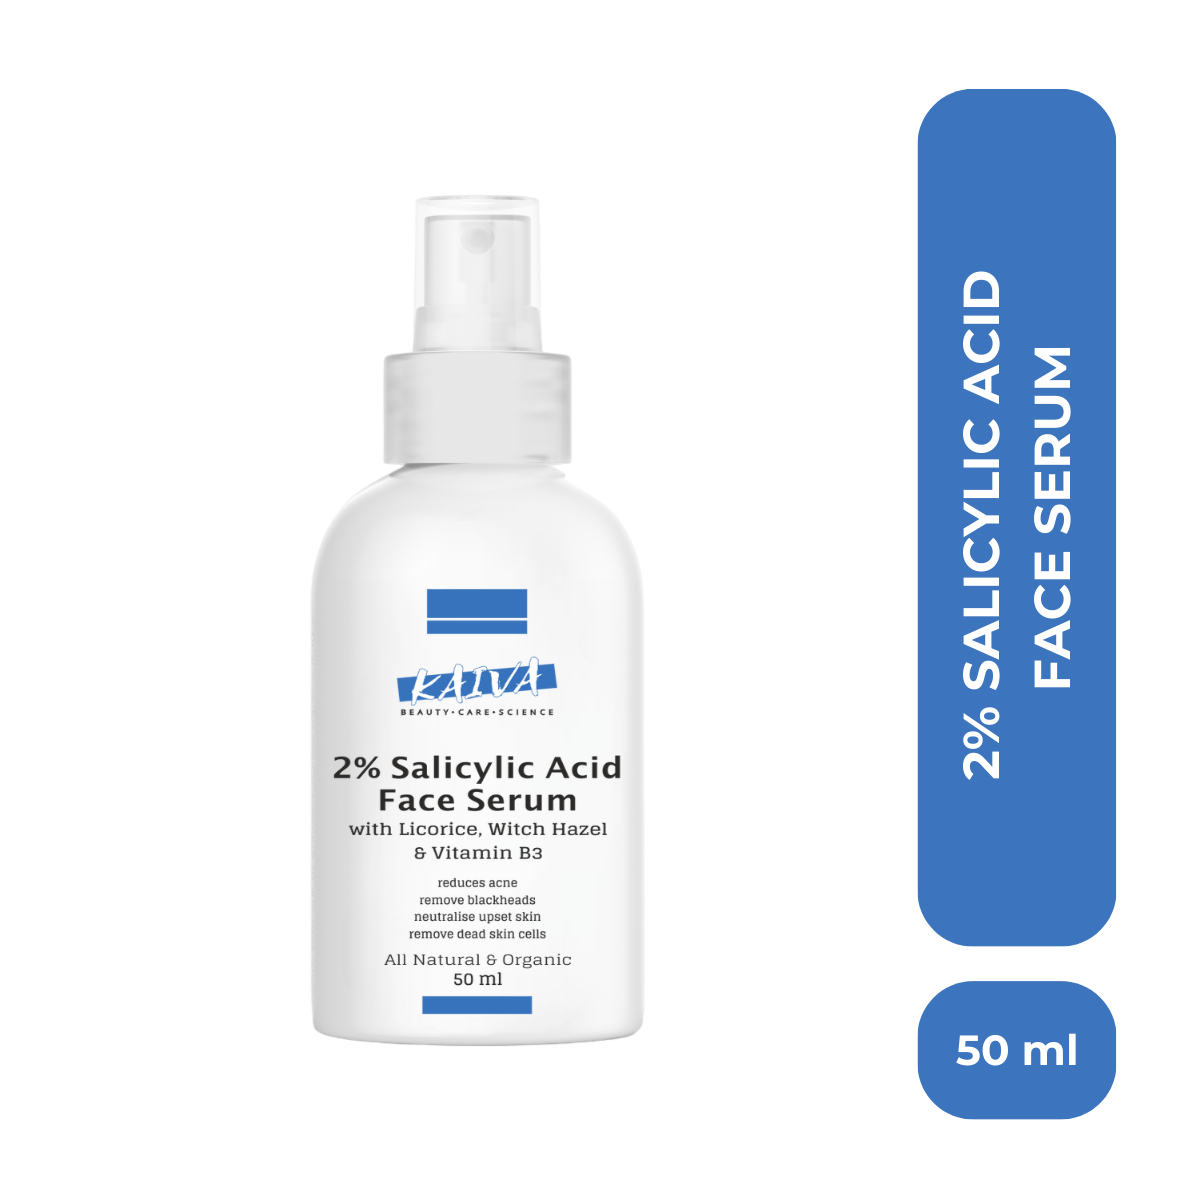 2% Salicylic Acid Face Serum for Acne, Blackheads & Open Pores